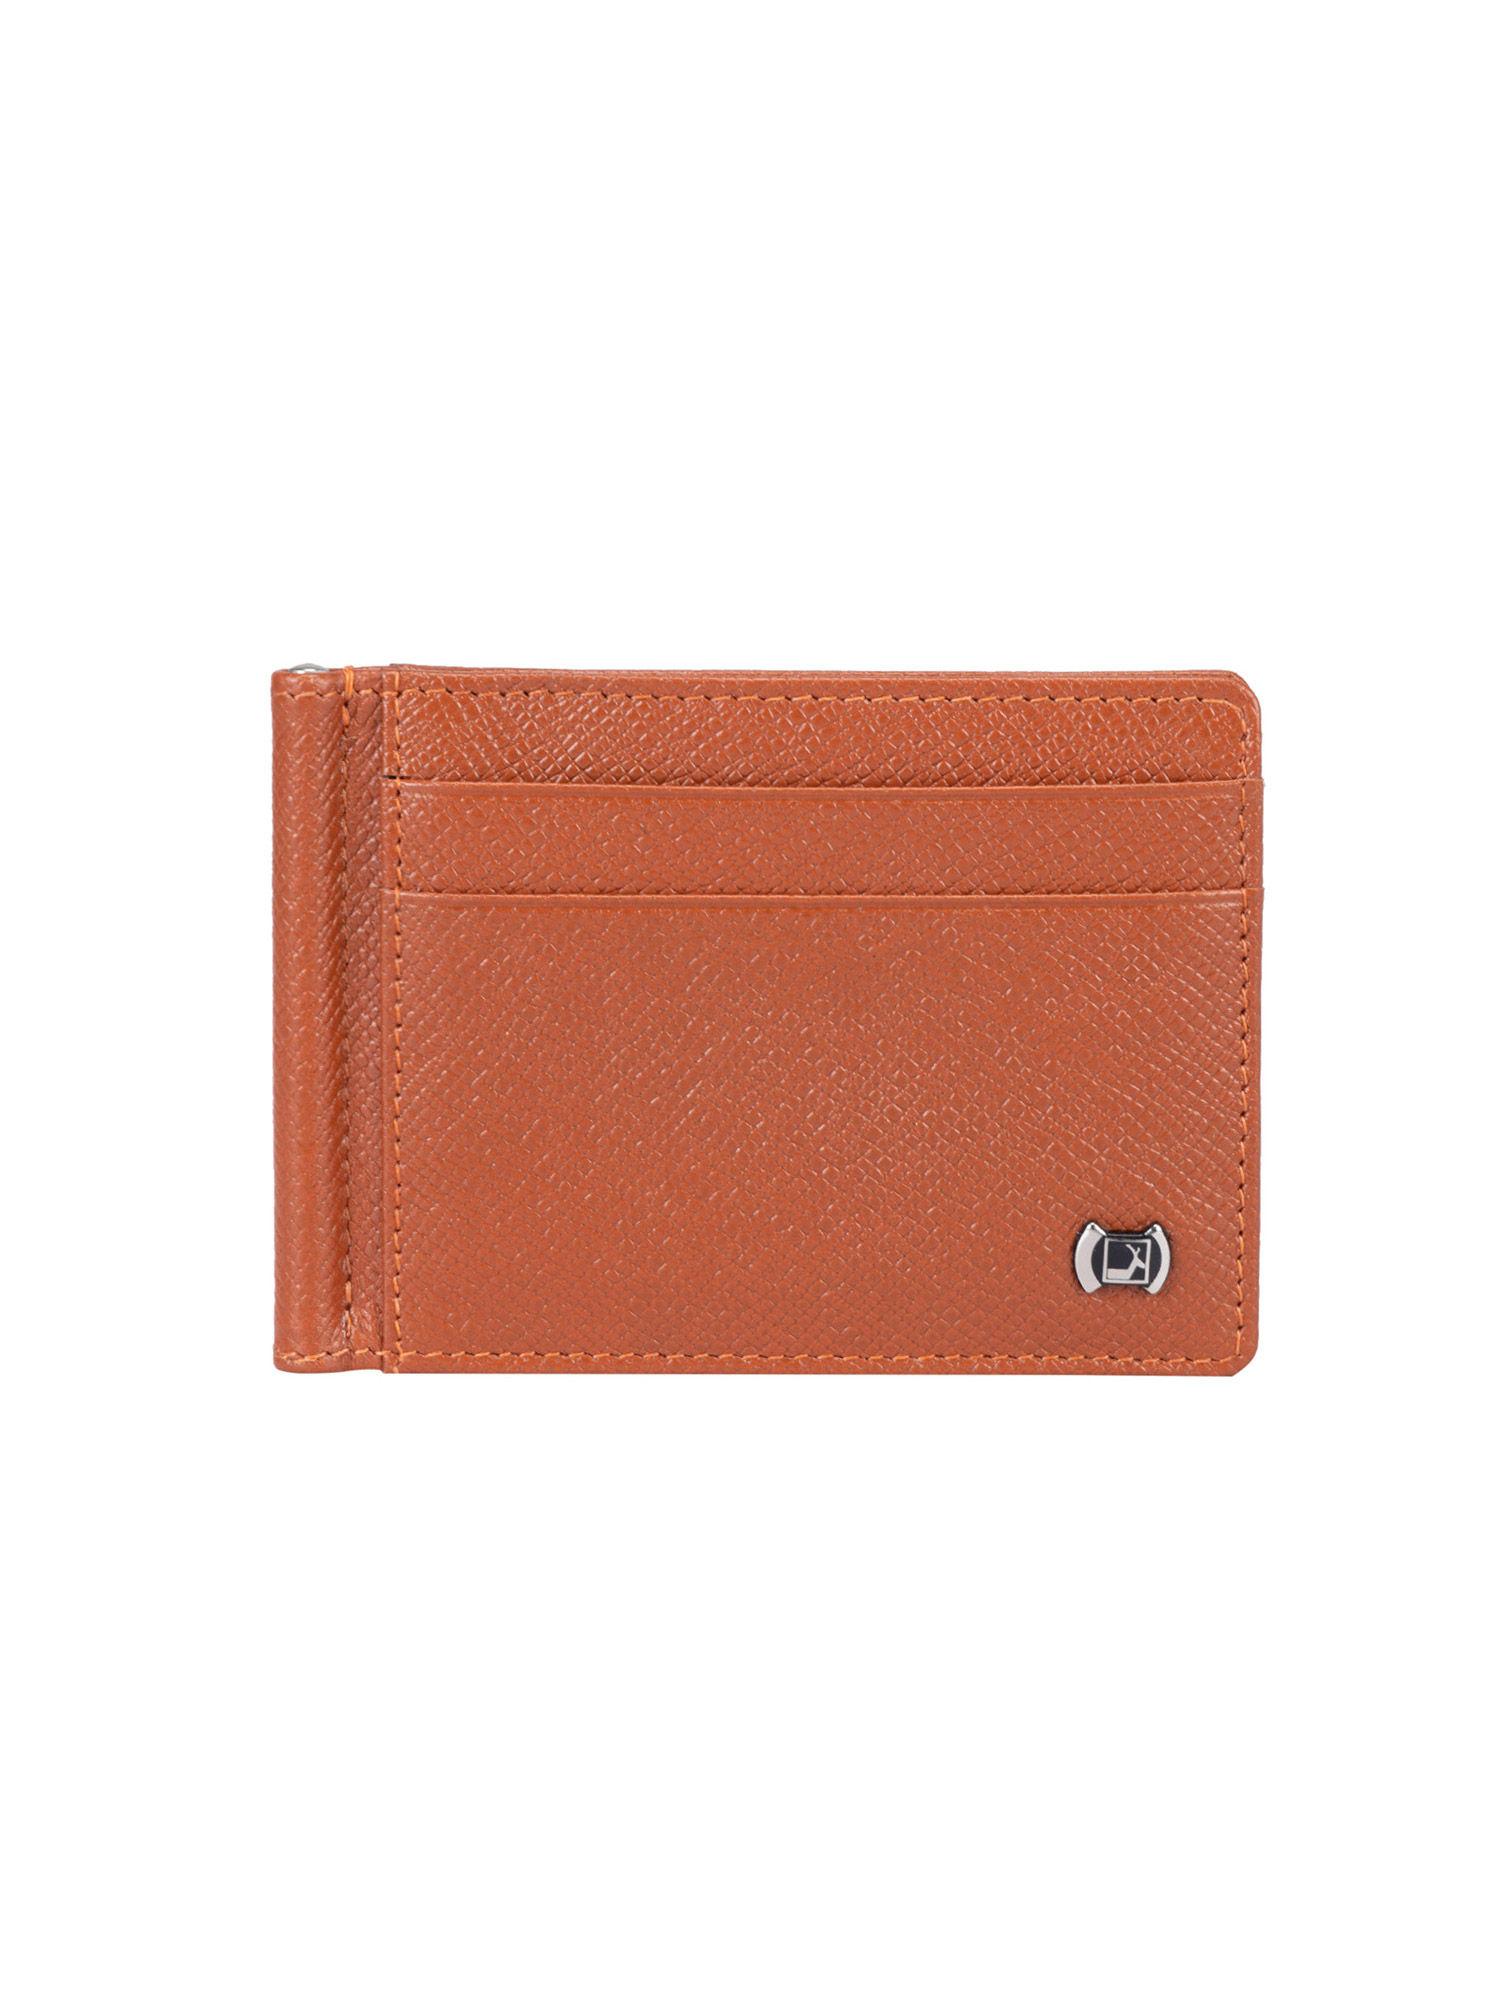 genuine leather rust wallet